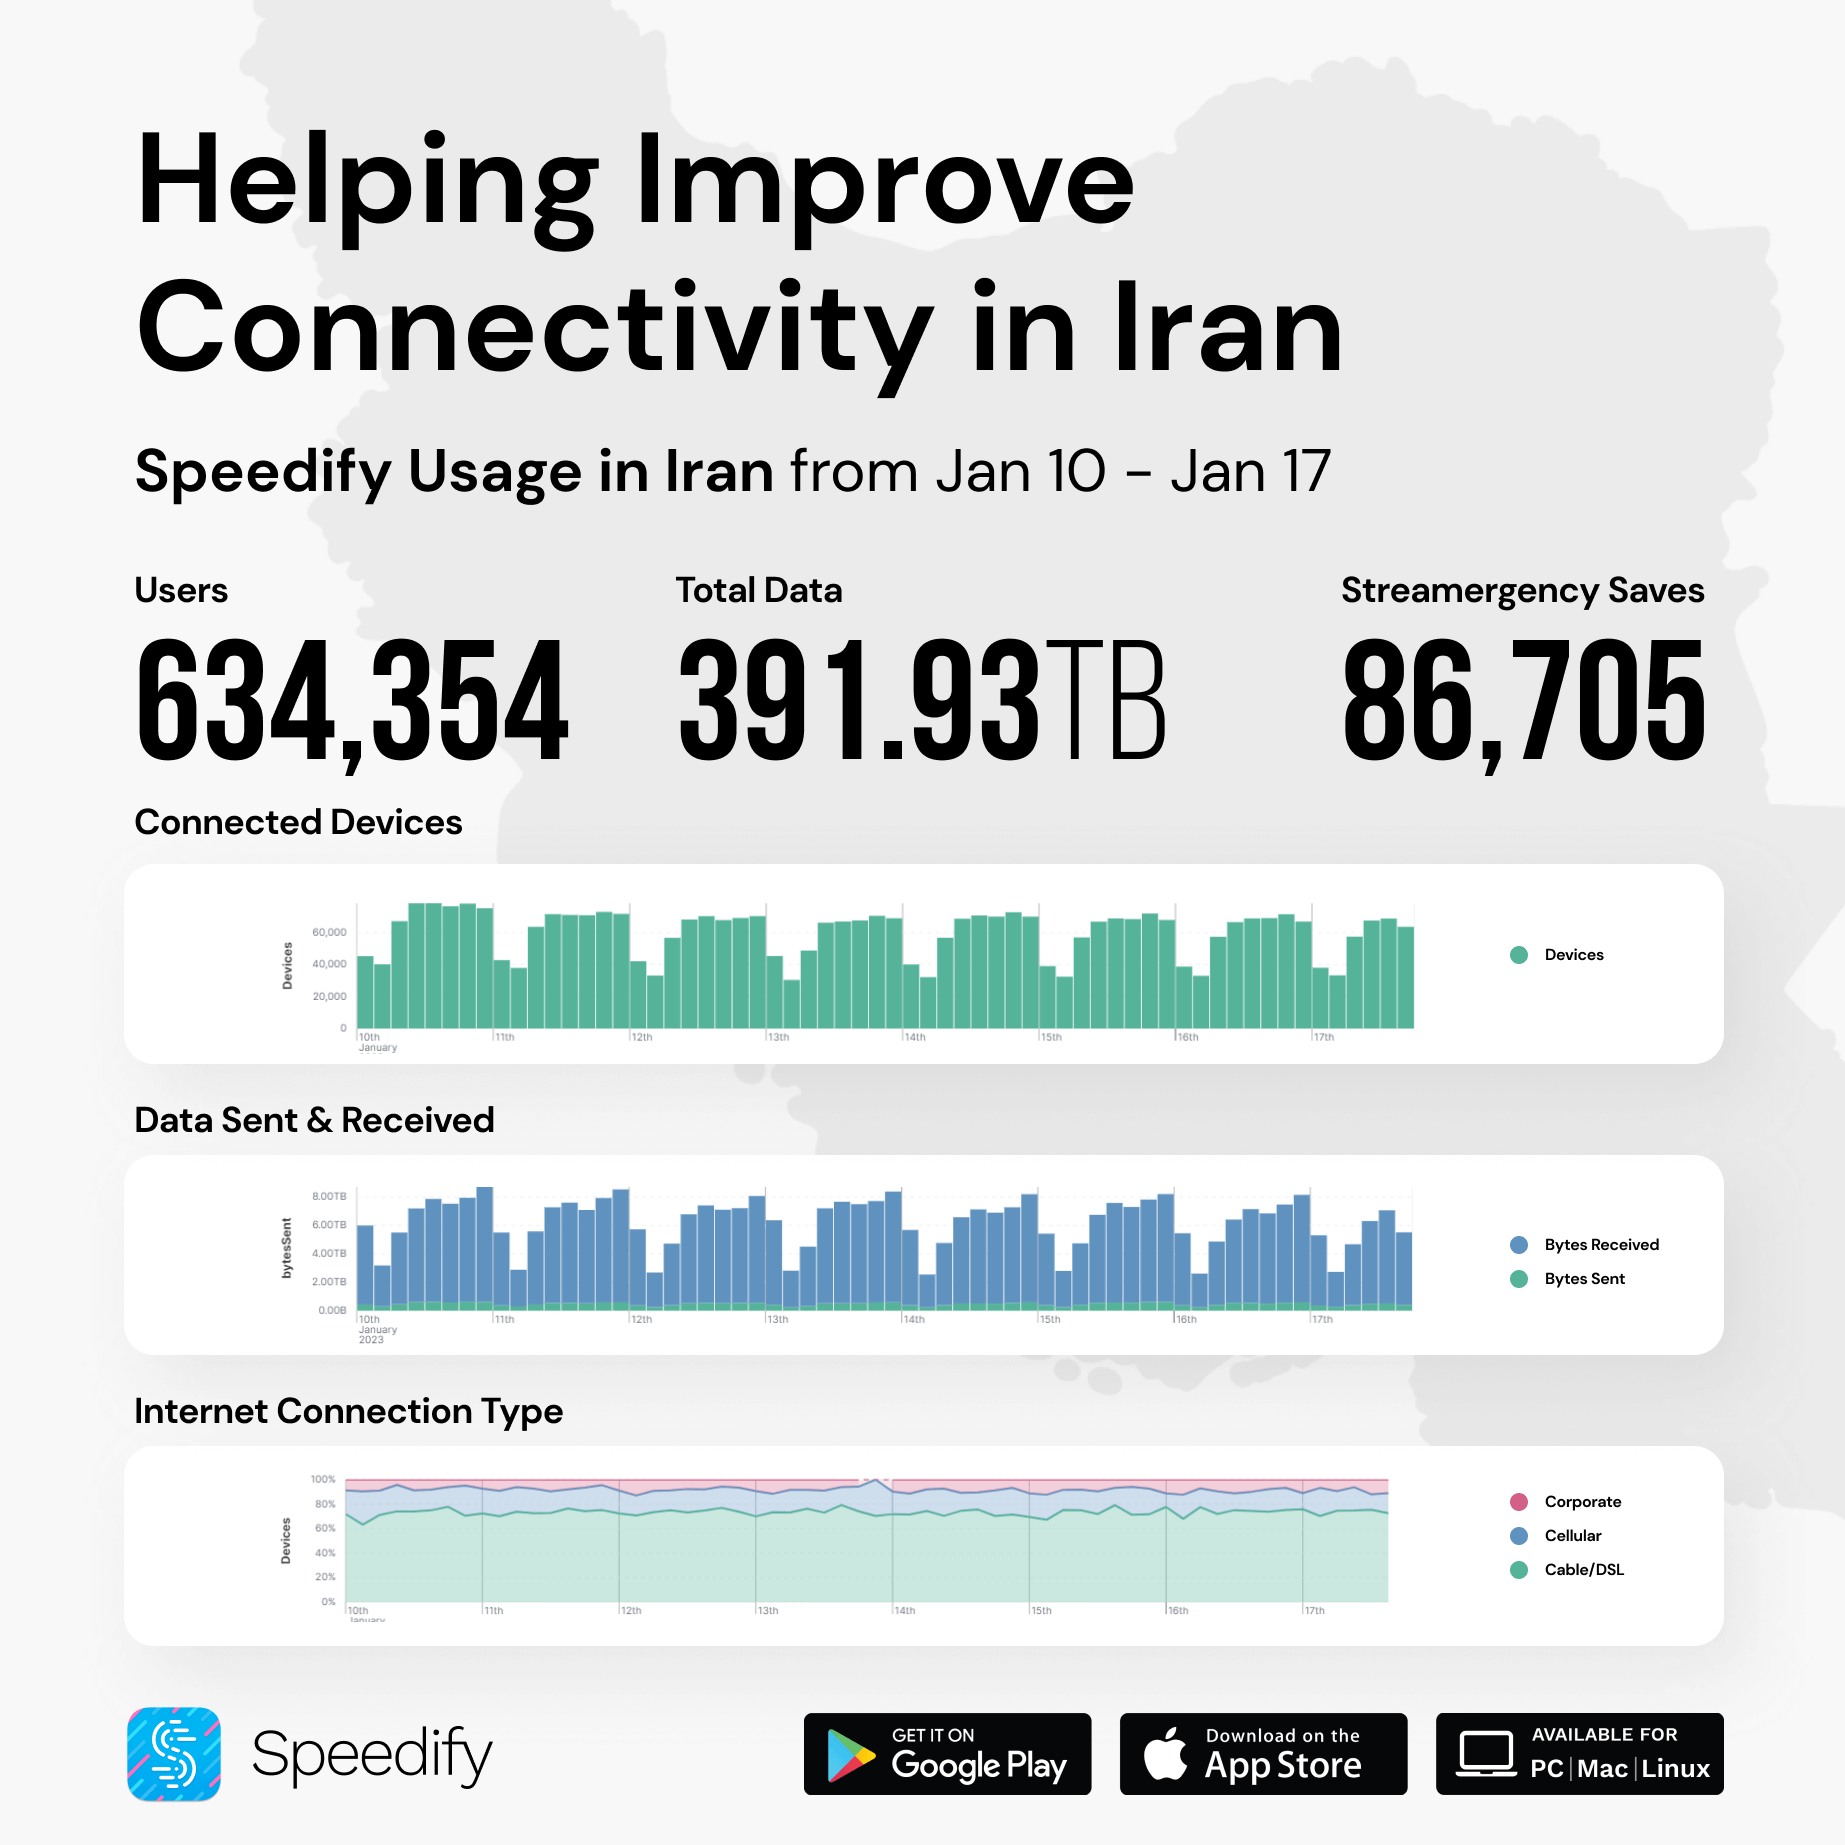 Jan 17 - Iran Internet usage for Speedify users